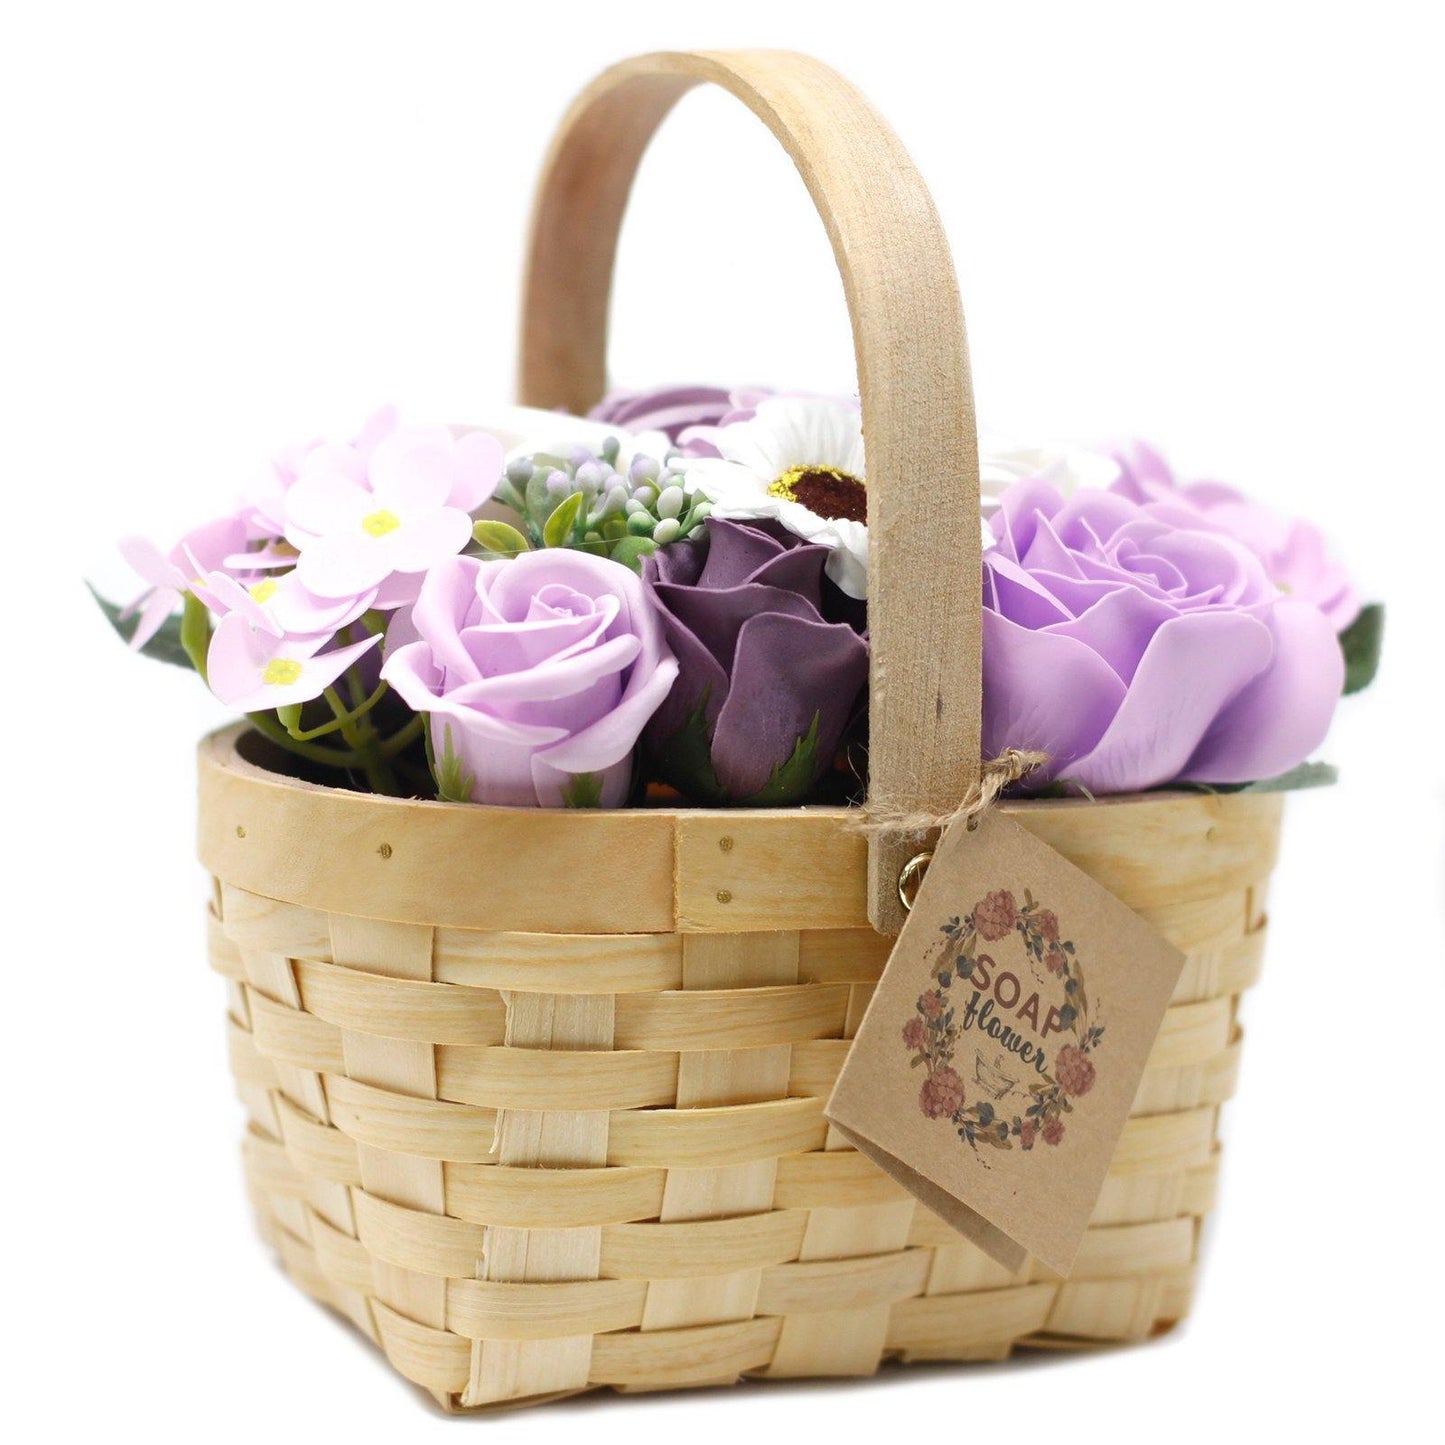 Scented Soap Lilac Purple Flower Bouquet in Wicker Basket - Bath Spa Gift - Kporium Home & Garden